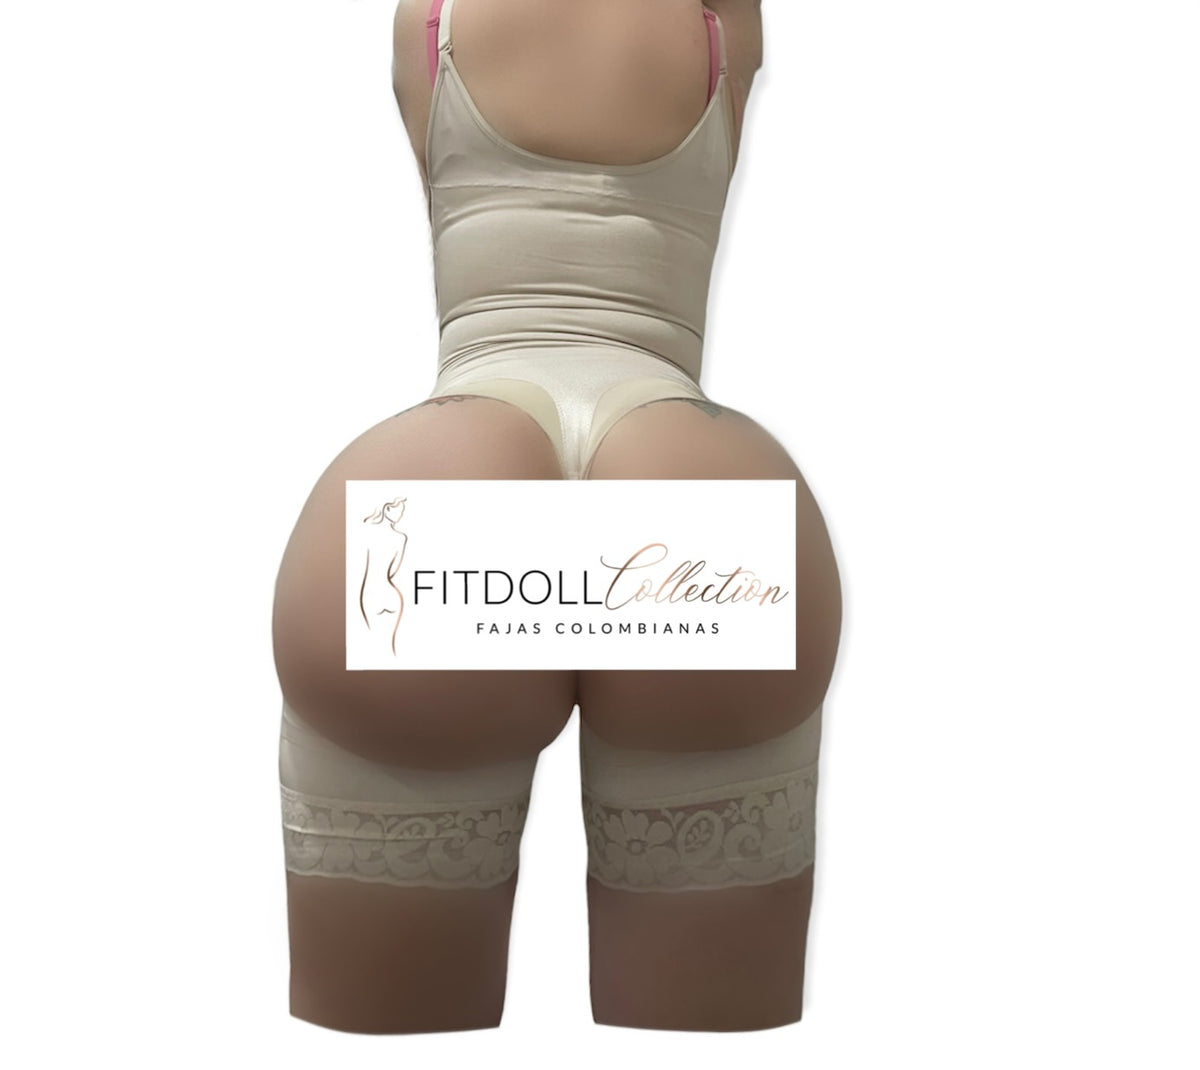 HOURGLASS WIDE STRAP / RELOJ DE ARENA TIRA ANCHA – Fit Doll Collection